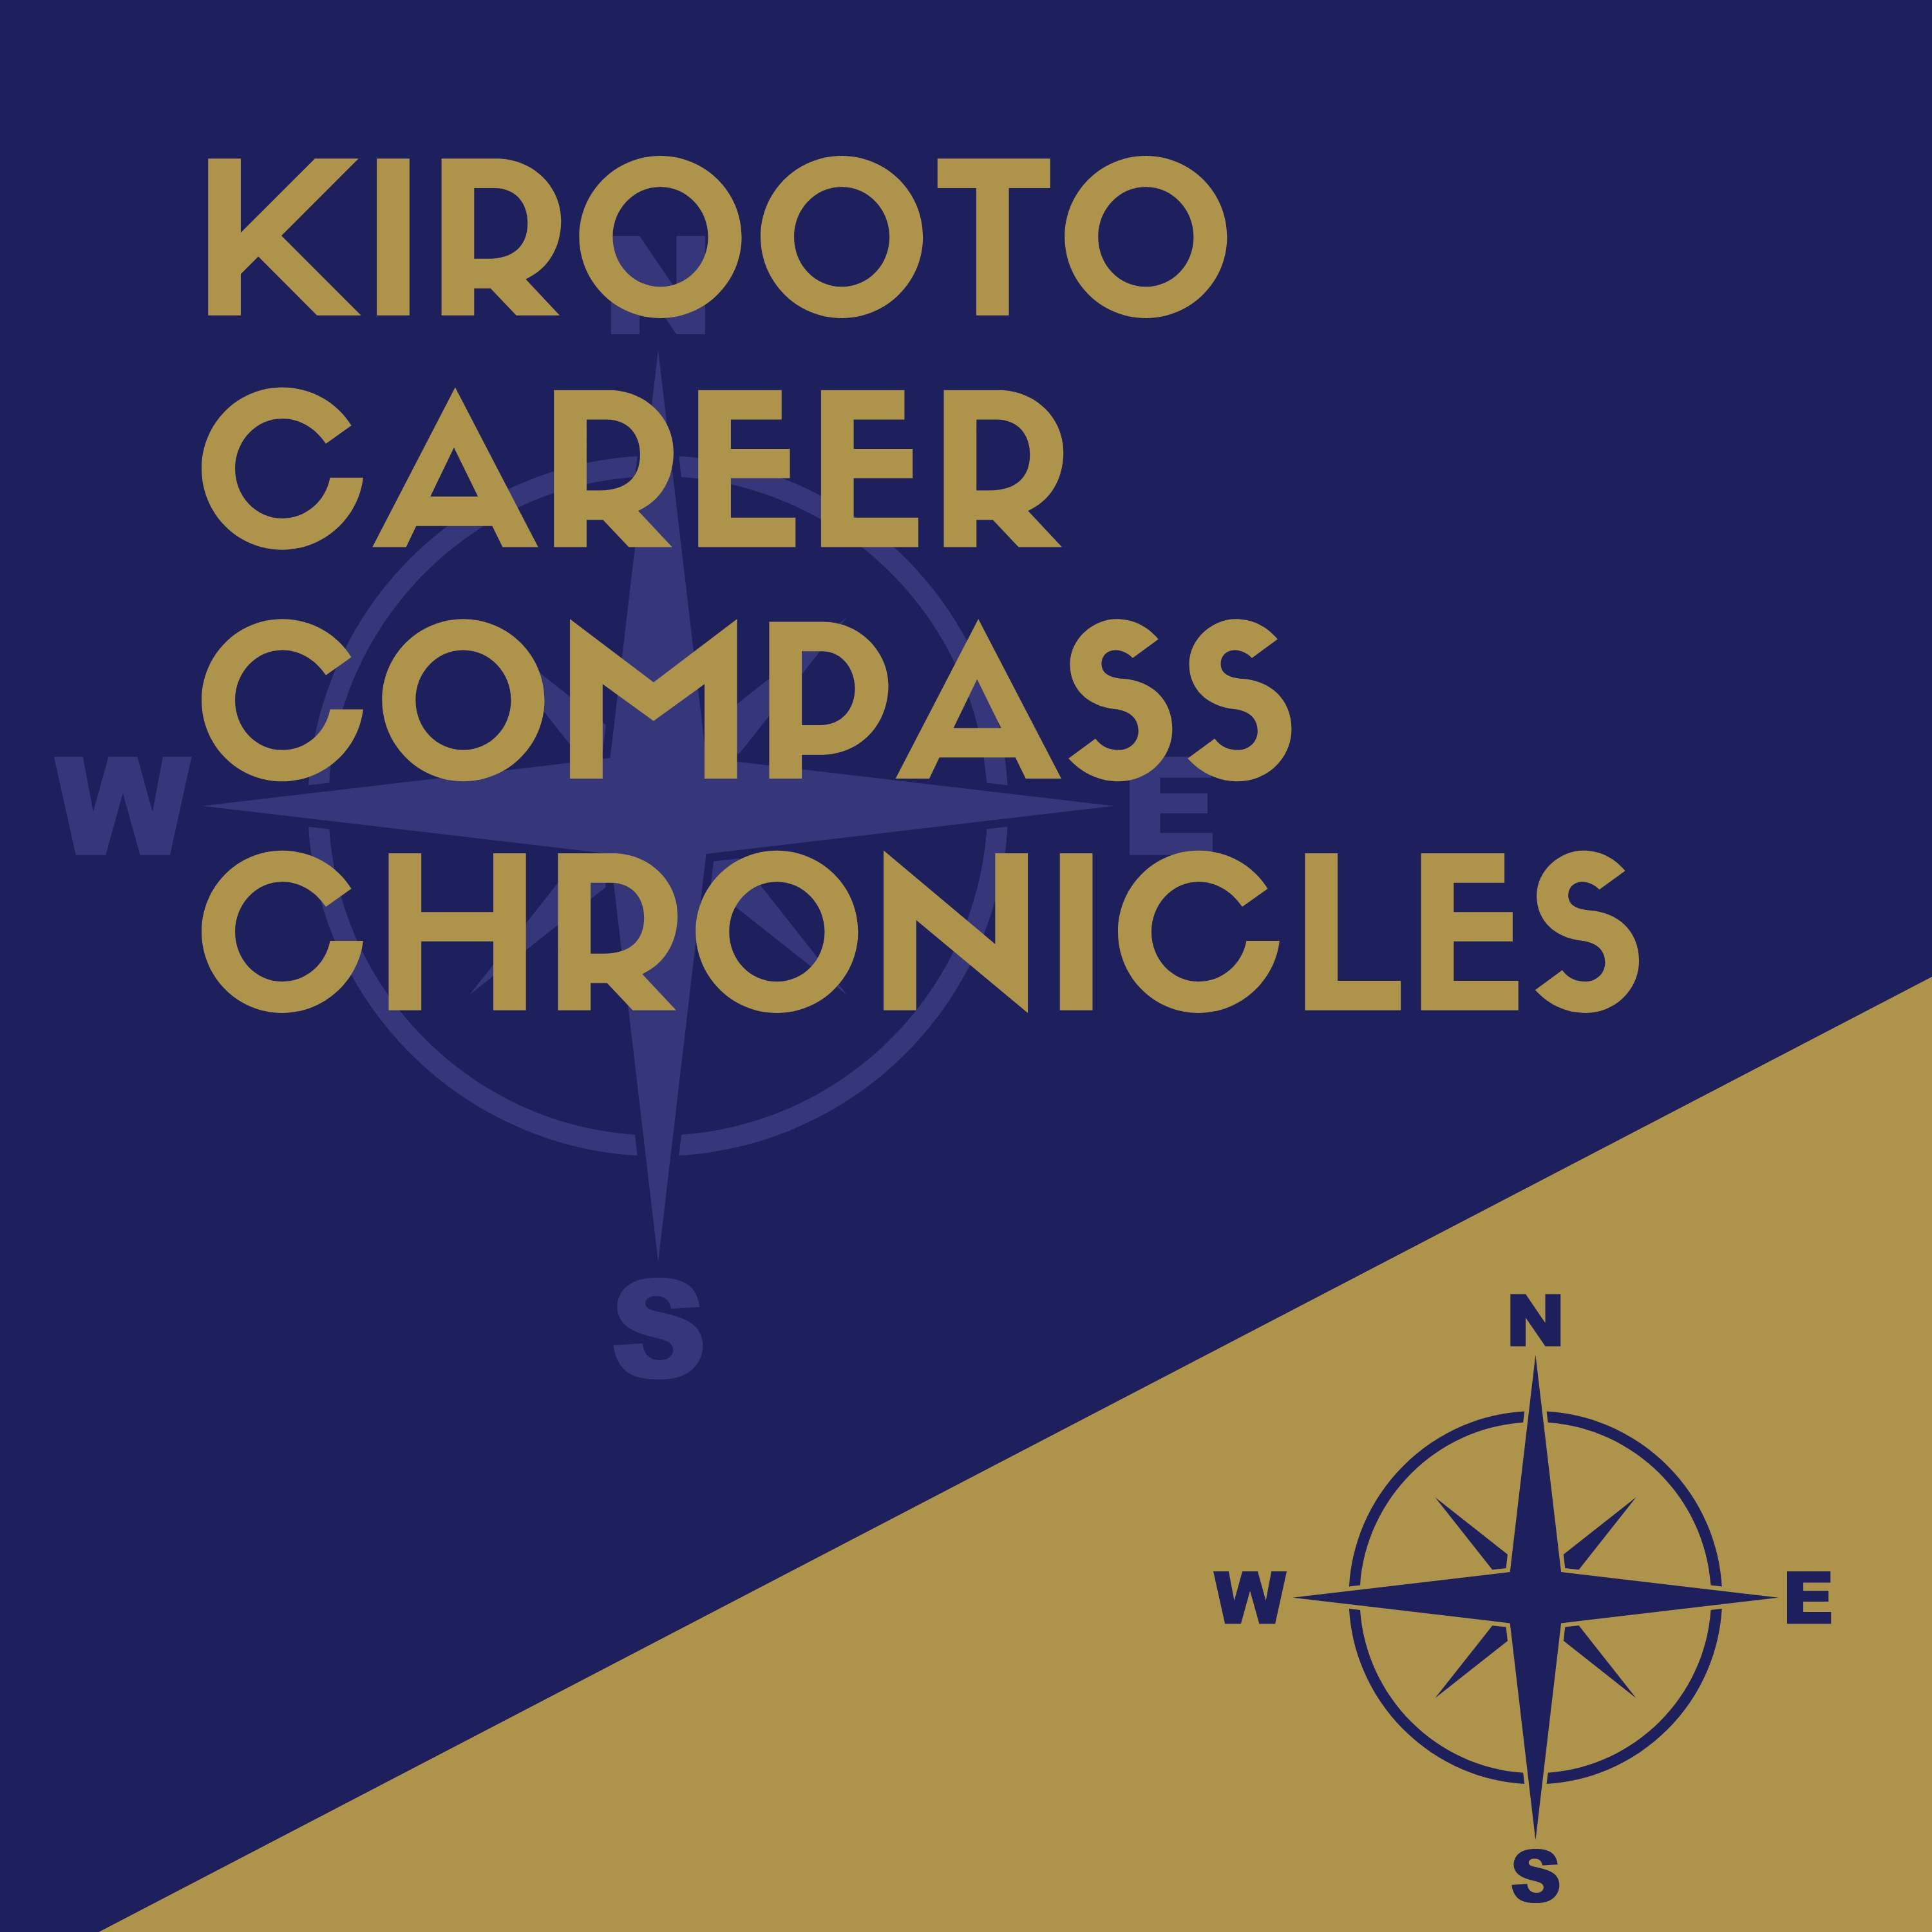 Kirooto Career Compass Chronicles Image